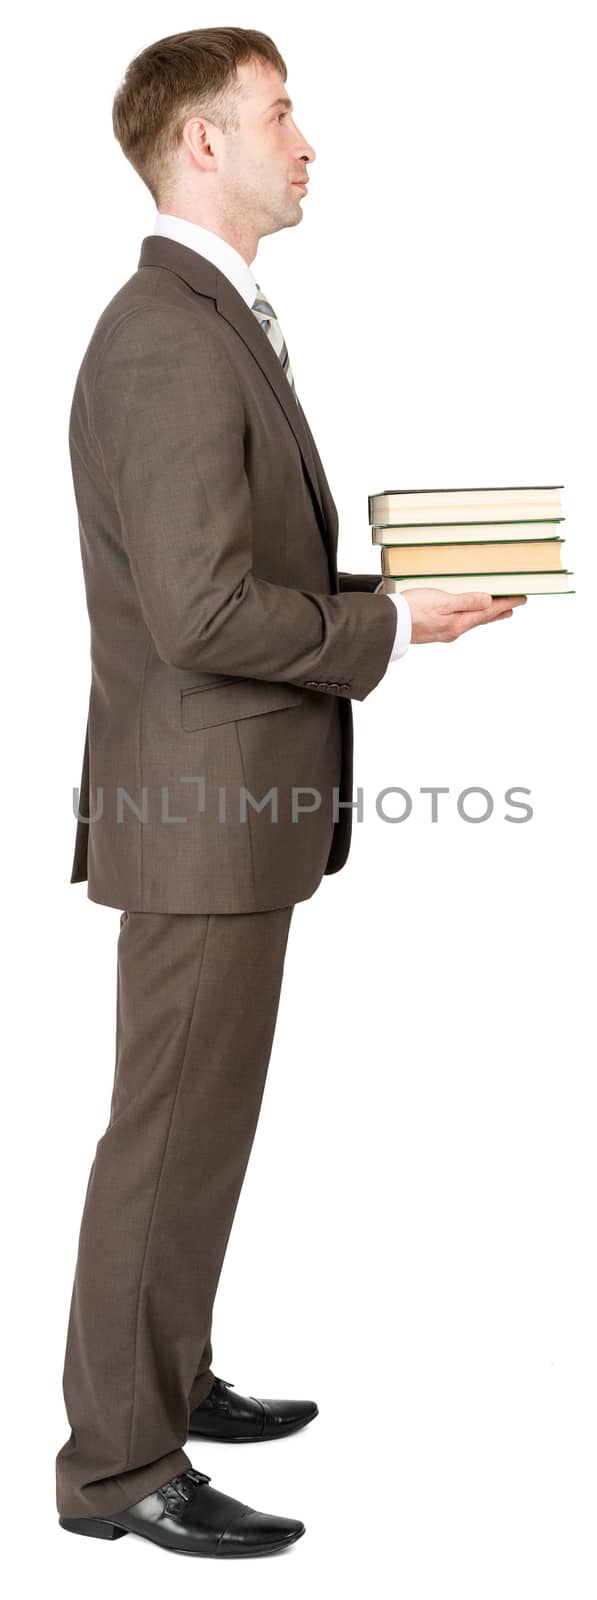 Businessman holding books isolated on white background